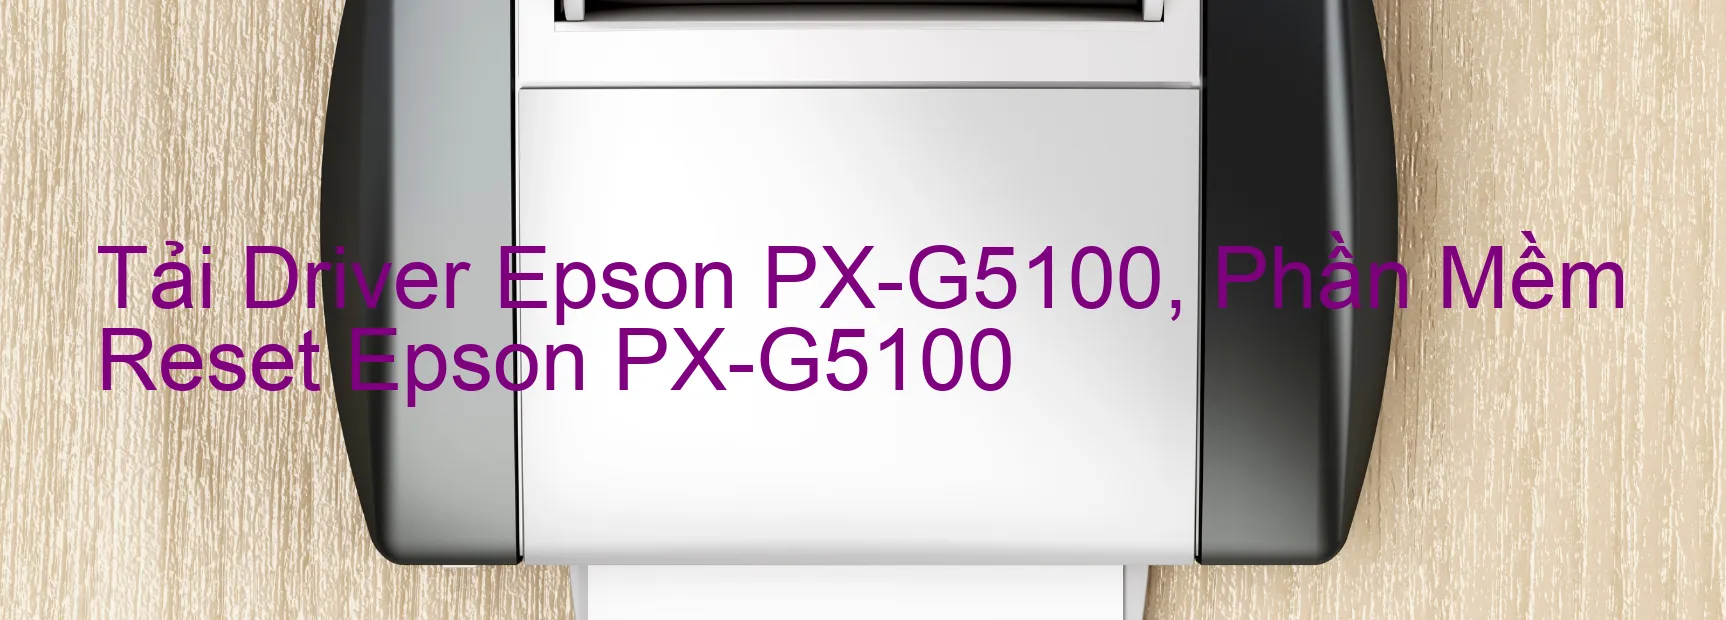 Driver Epson PX-G5100, Phần Mềm Reset Epson PX-G5100